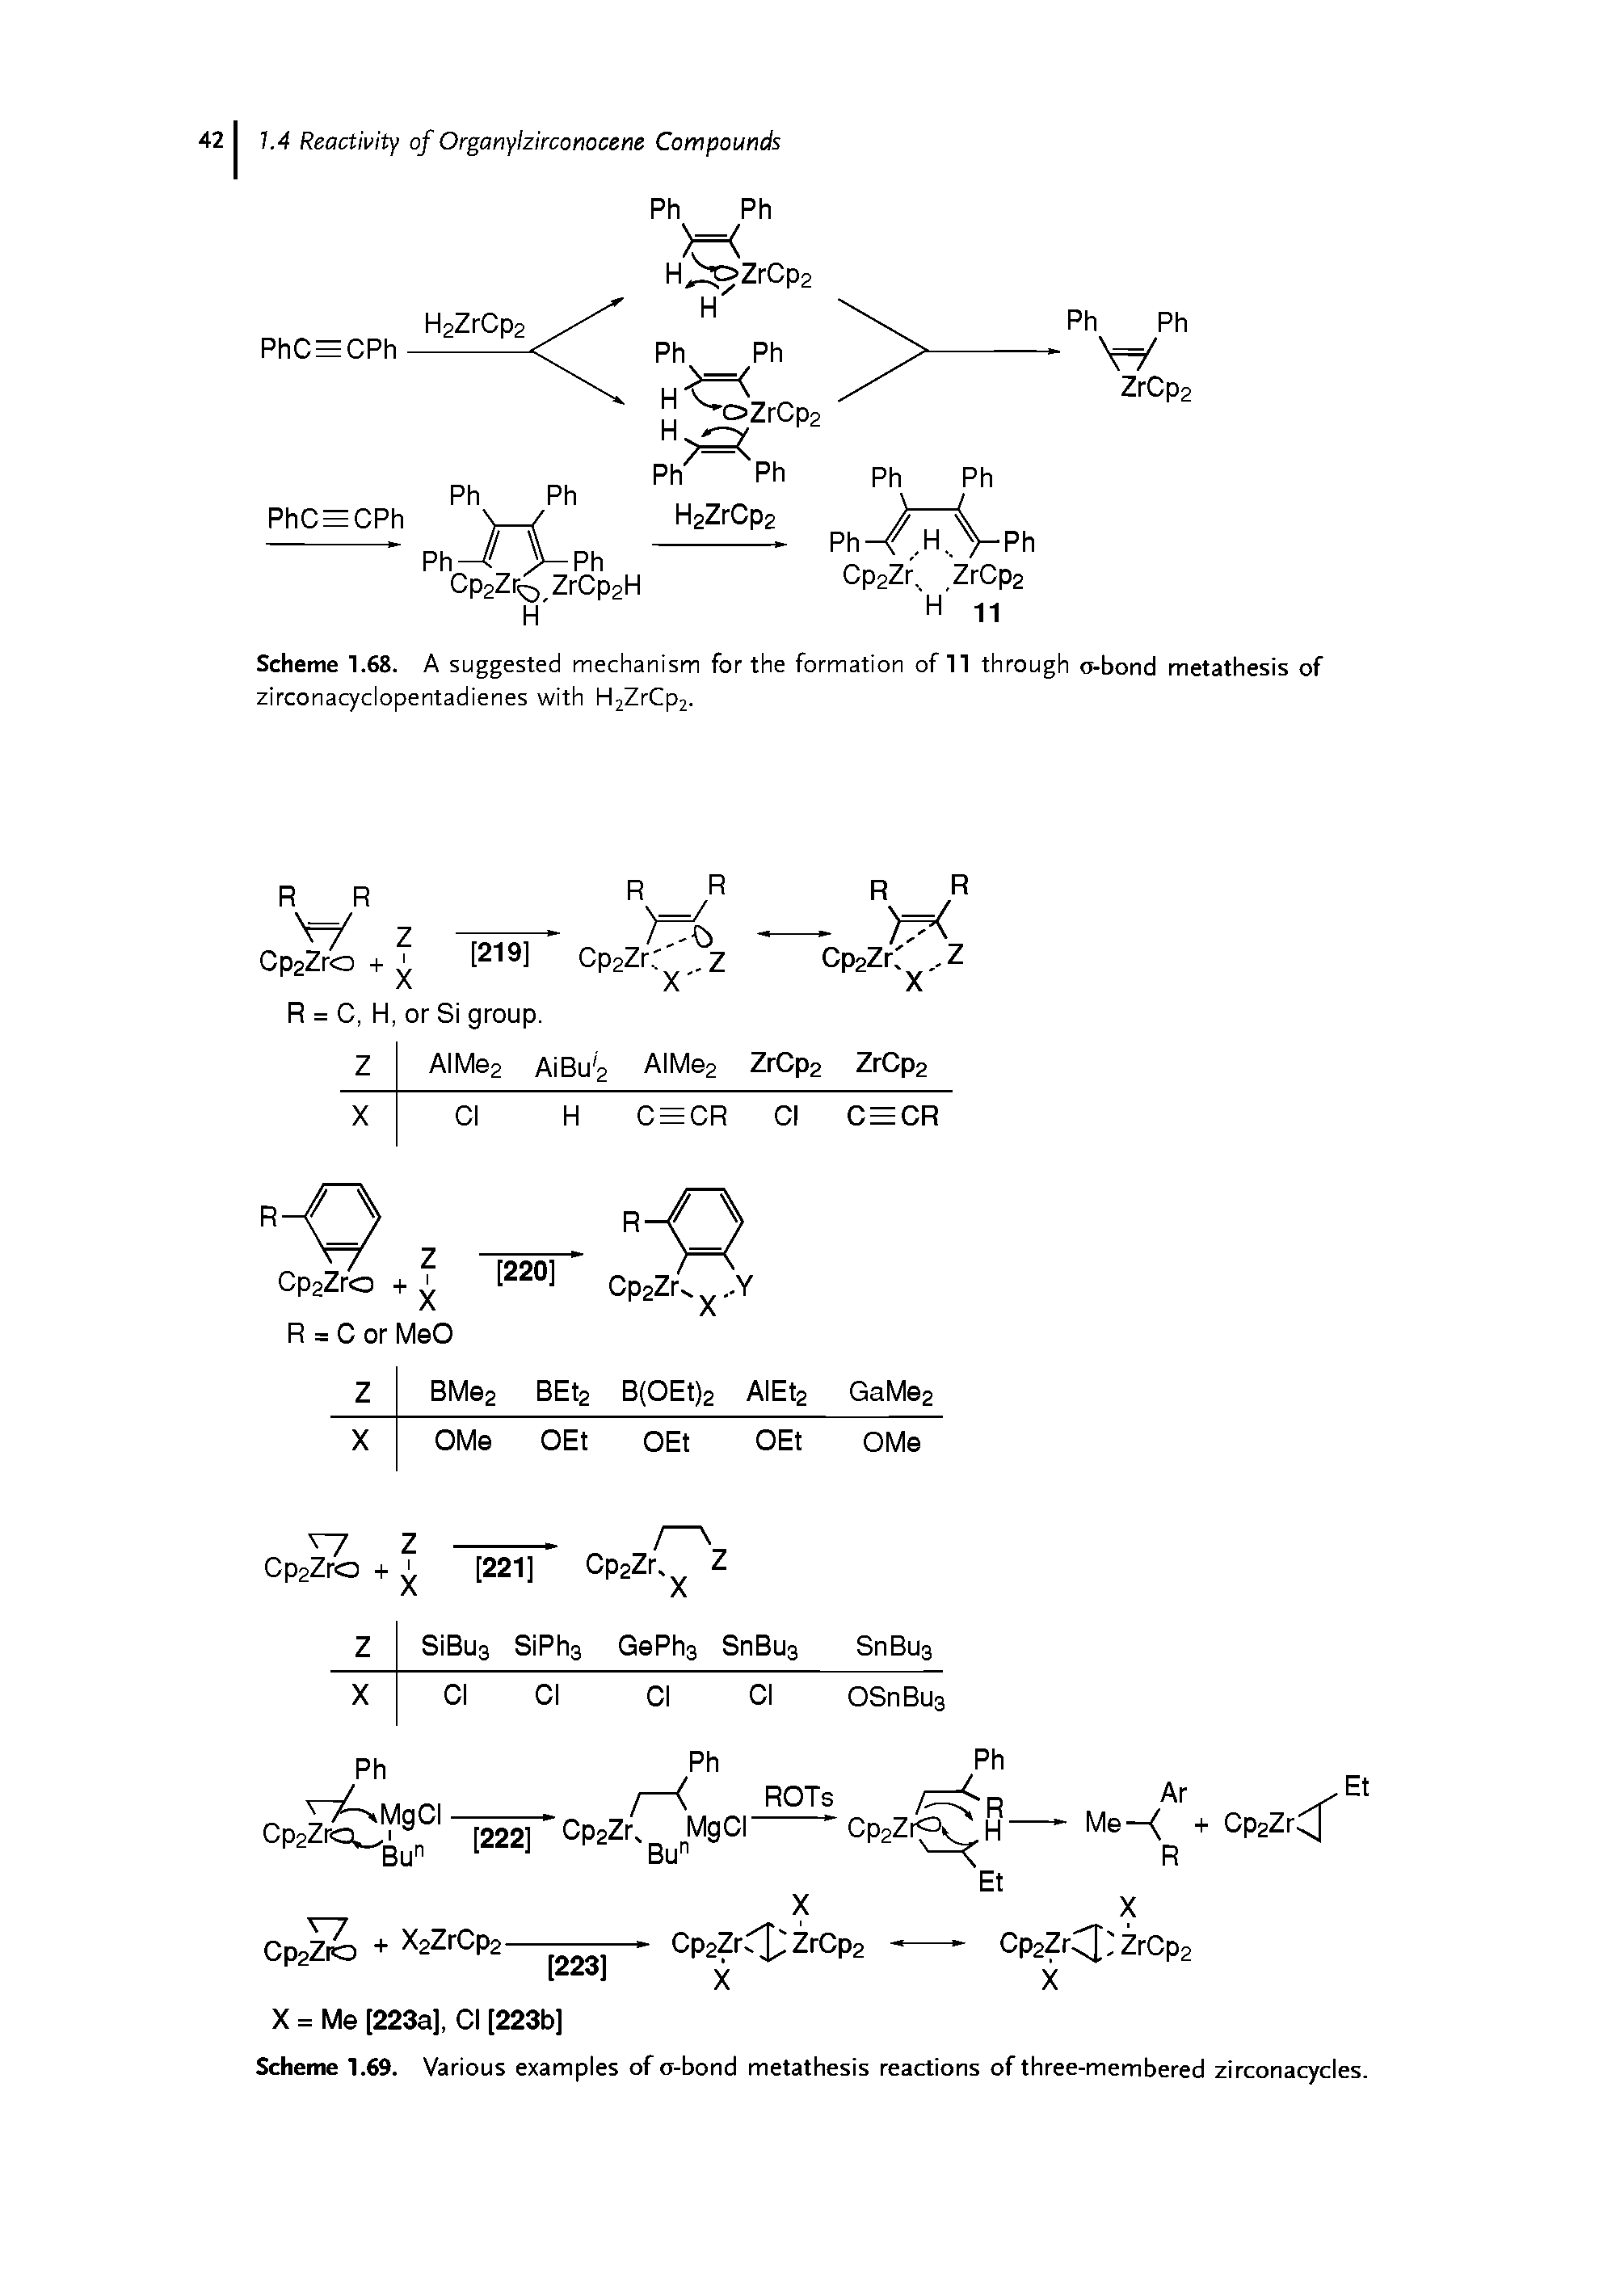 Scheme 1.69. Various examples of a-bond metathesis reactions of three-membered zirconacycles.